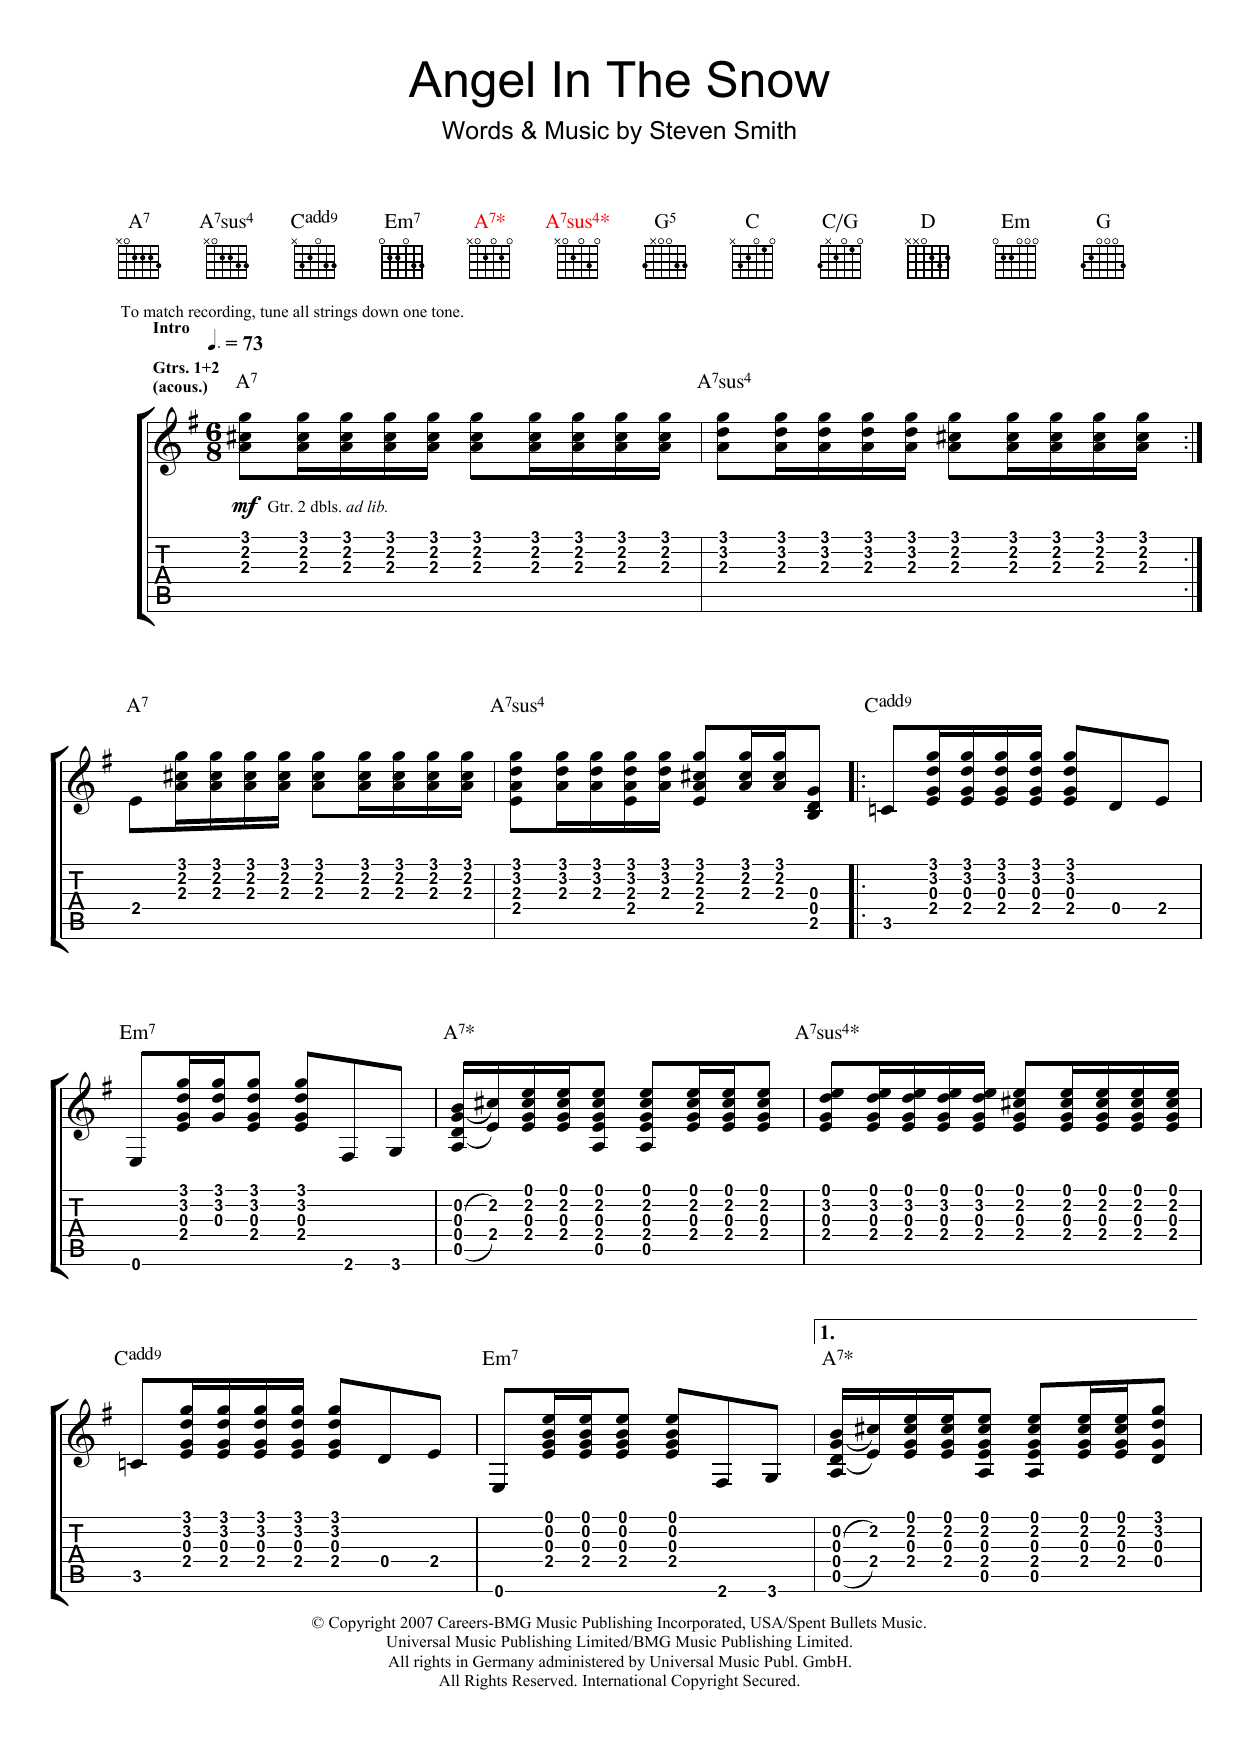 Elliott Smith "Angel In The Snow" Sheet PDF Chords | Rock Score Guitar Tab Download Printable. SKU: 44460